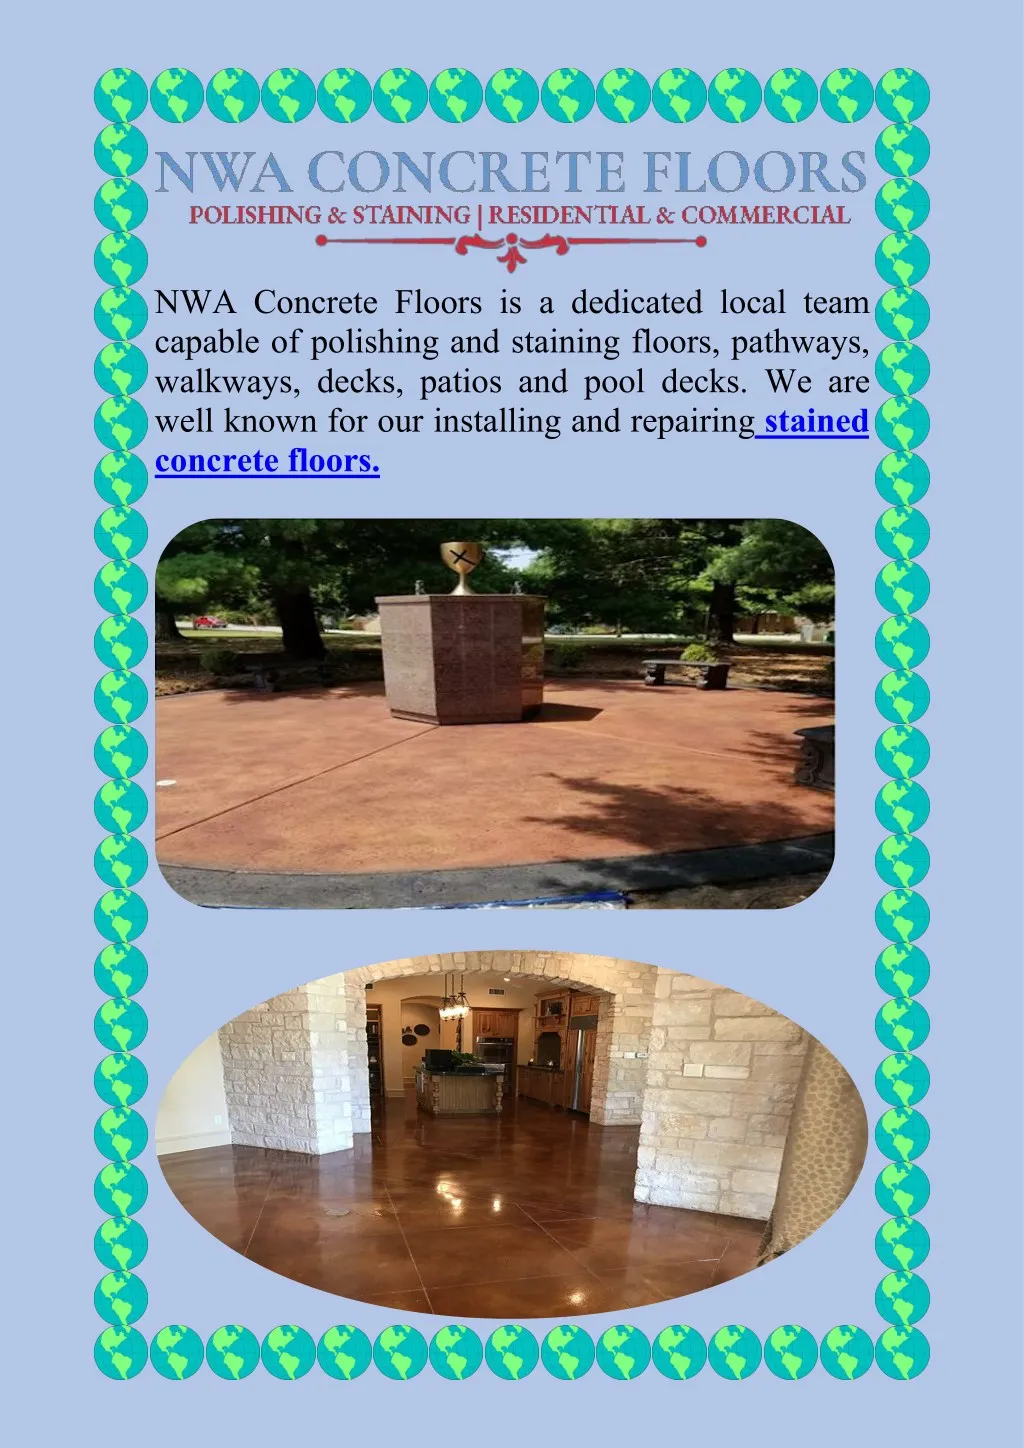 nwa concrete floors is a dedicated local team